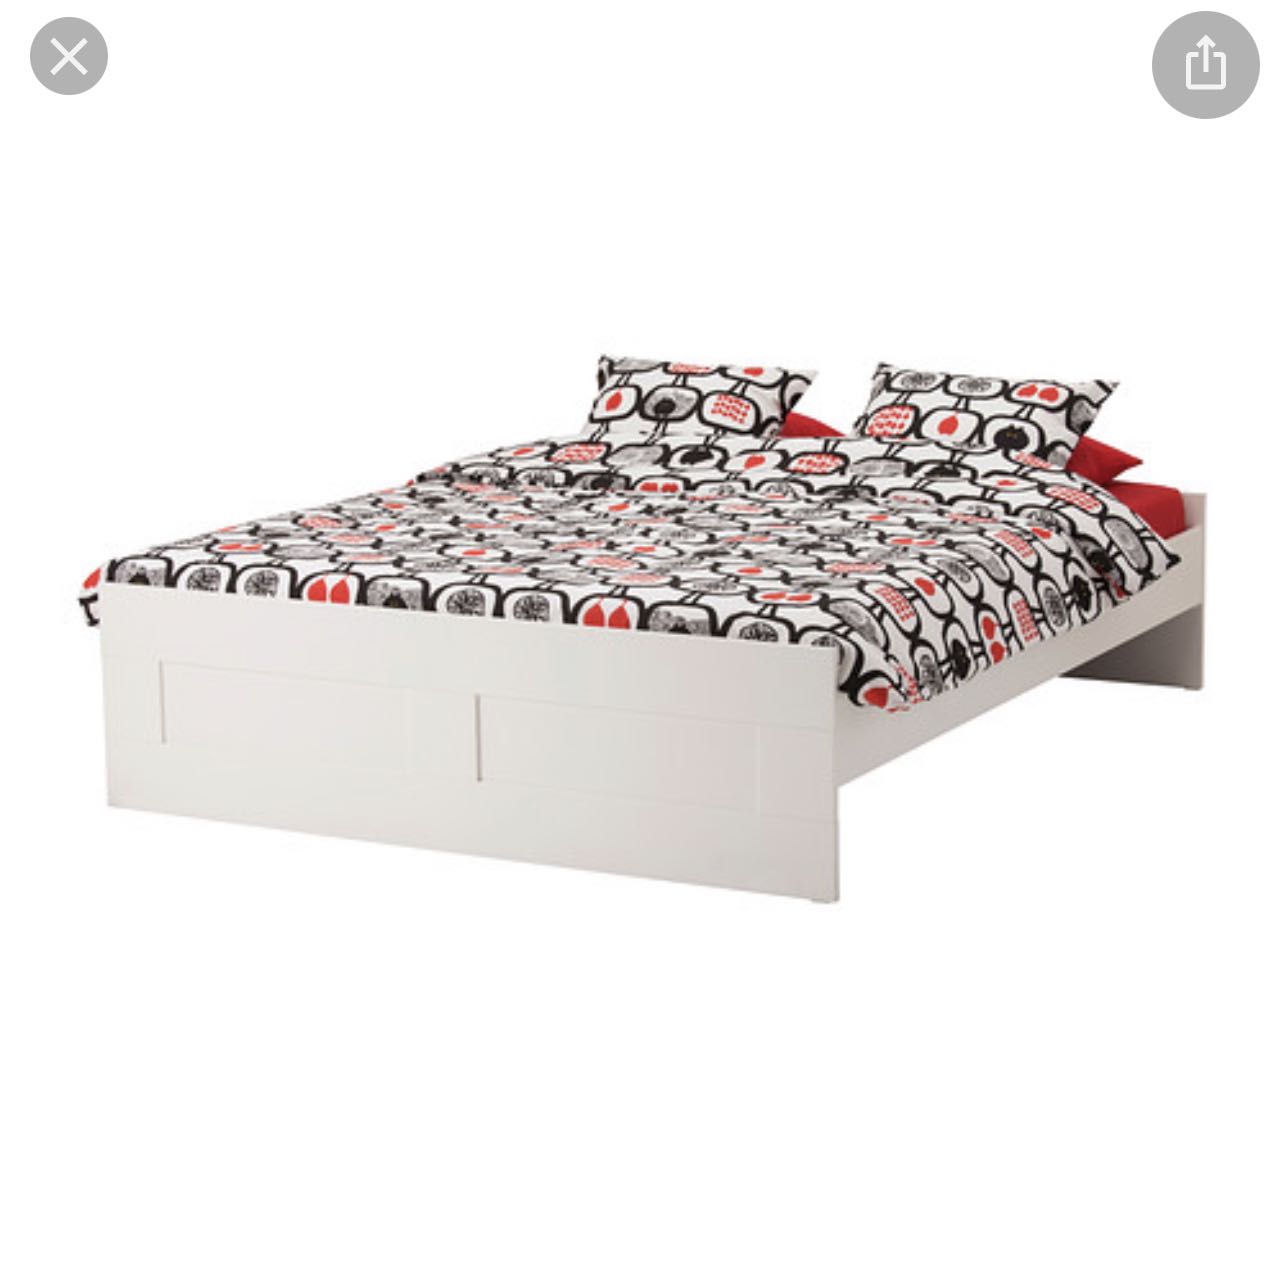 Ikea Brimnes Bed Frame Without Storage, Brimnes Bed Frame With Storage Headboard Full